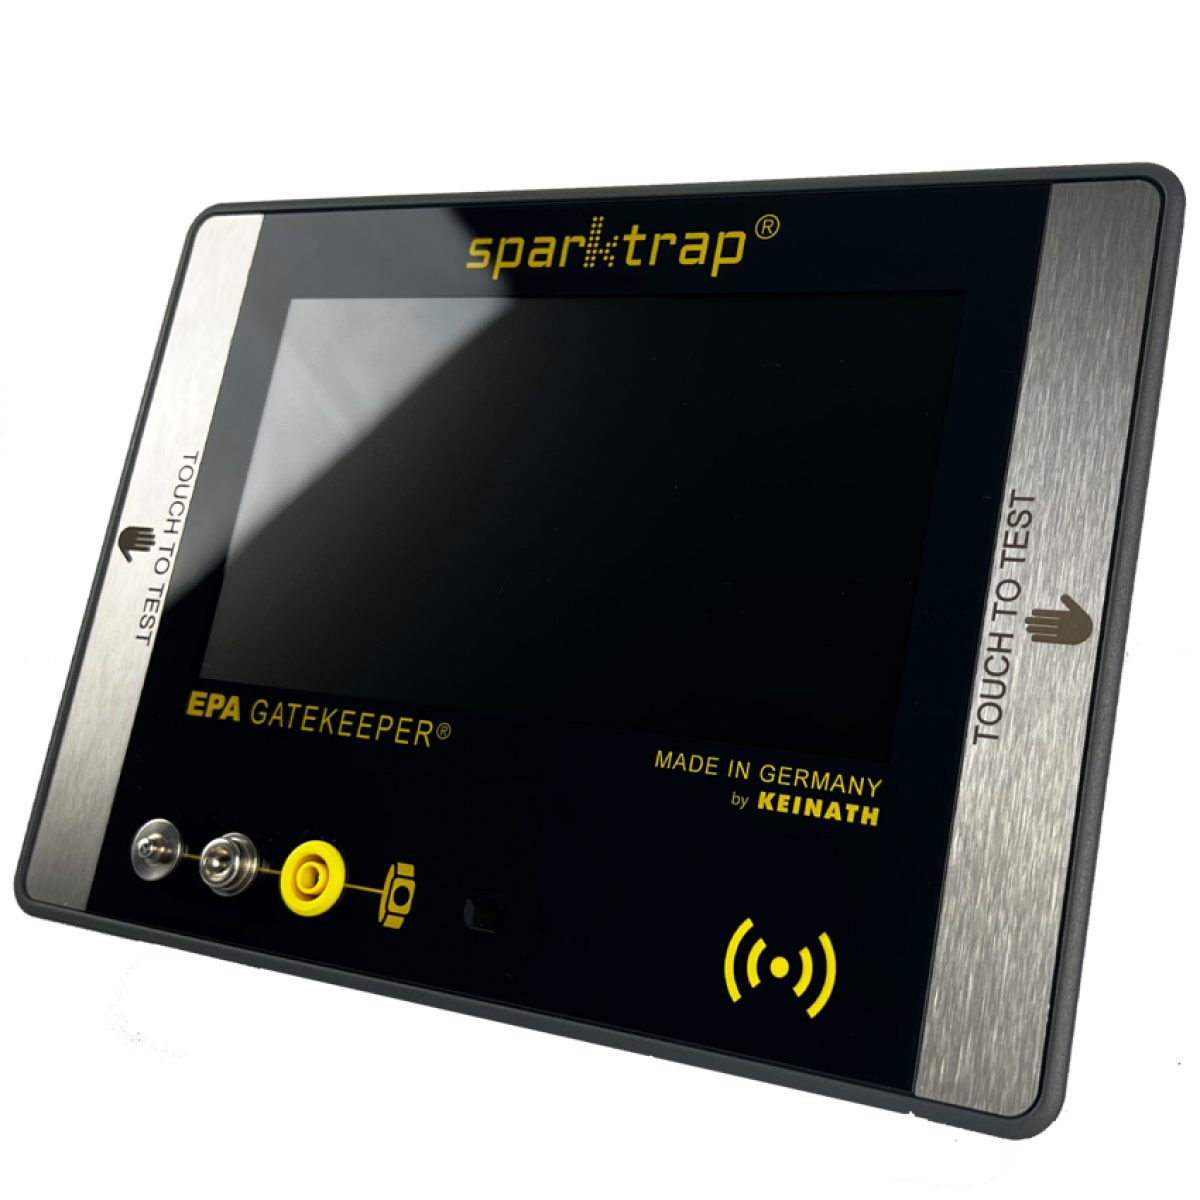 sparktrap® EPA GATEKEEPER® compact